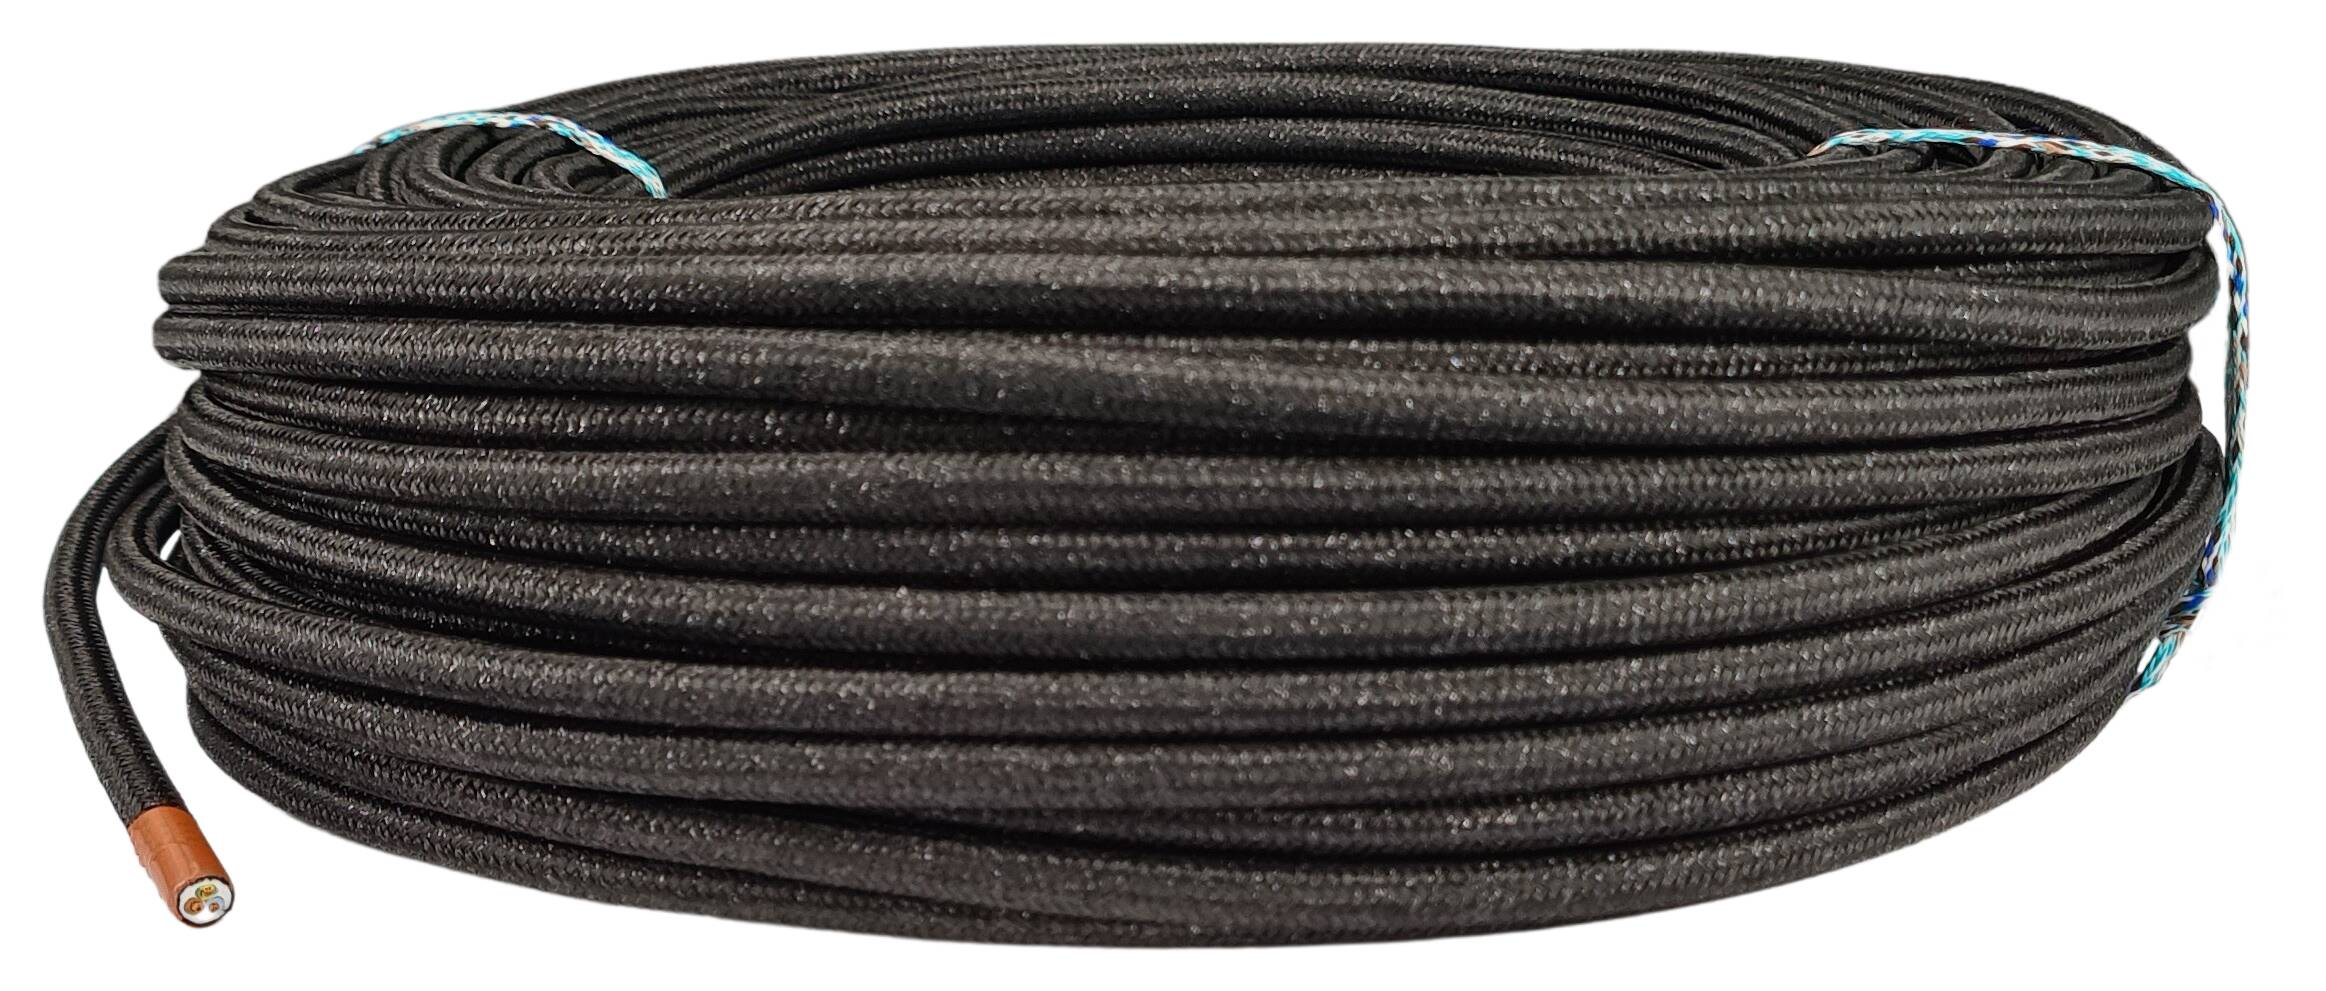 Kabel 3G 0,75 H03VV-F textilummantelt metallic RAL 9005 schwarz